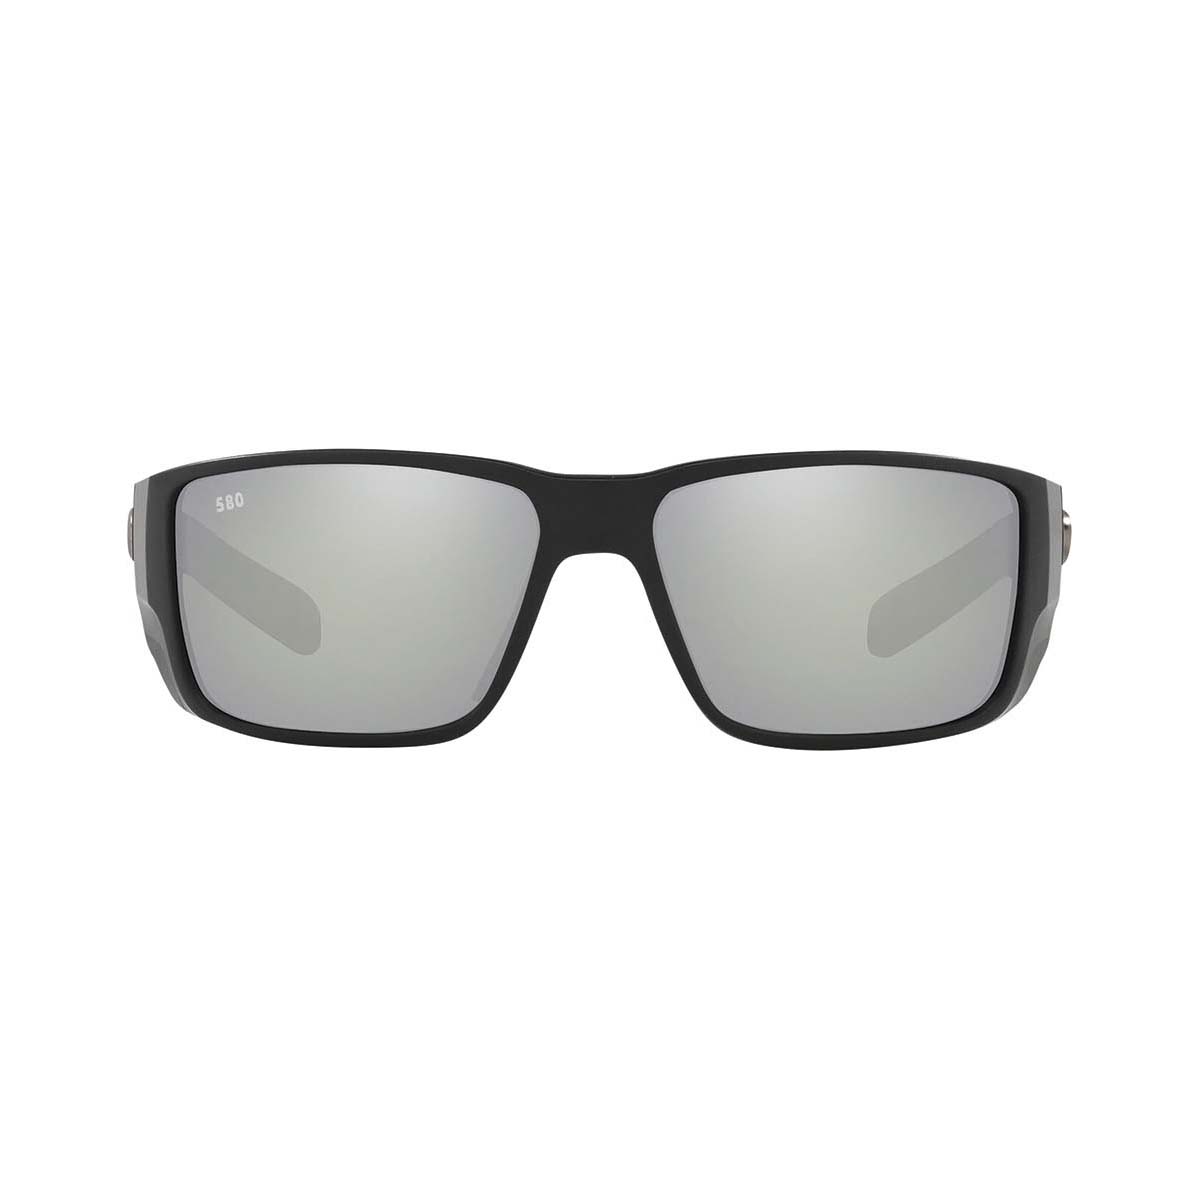 Costa Blackfin Pro Men's Sunglasses Black with Grey Lens